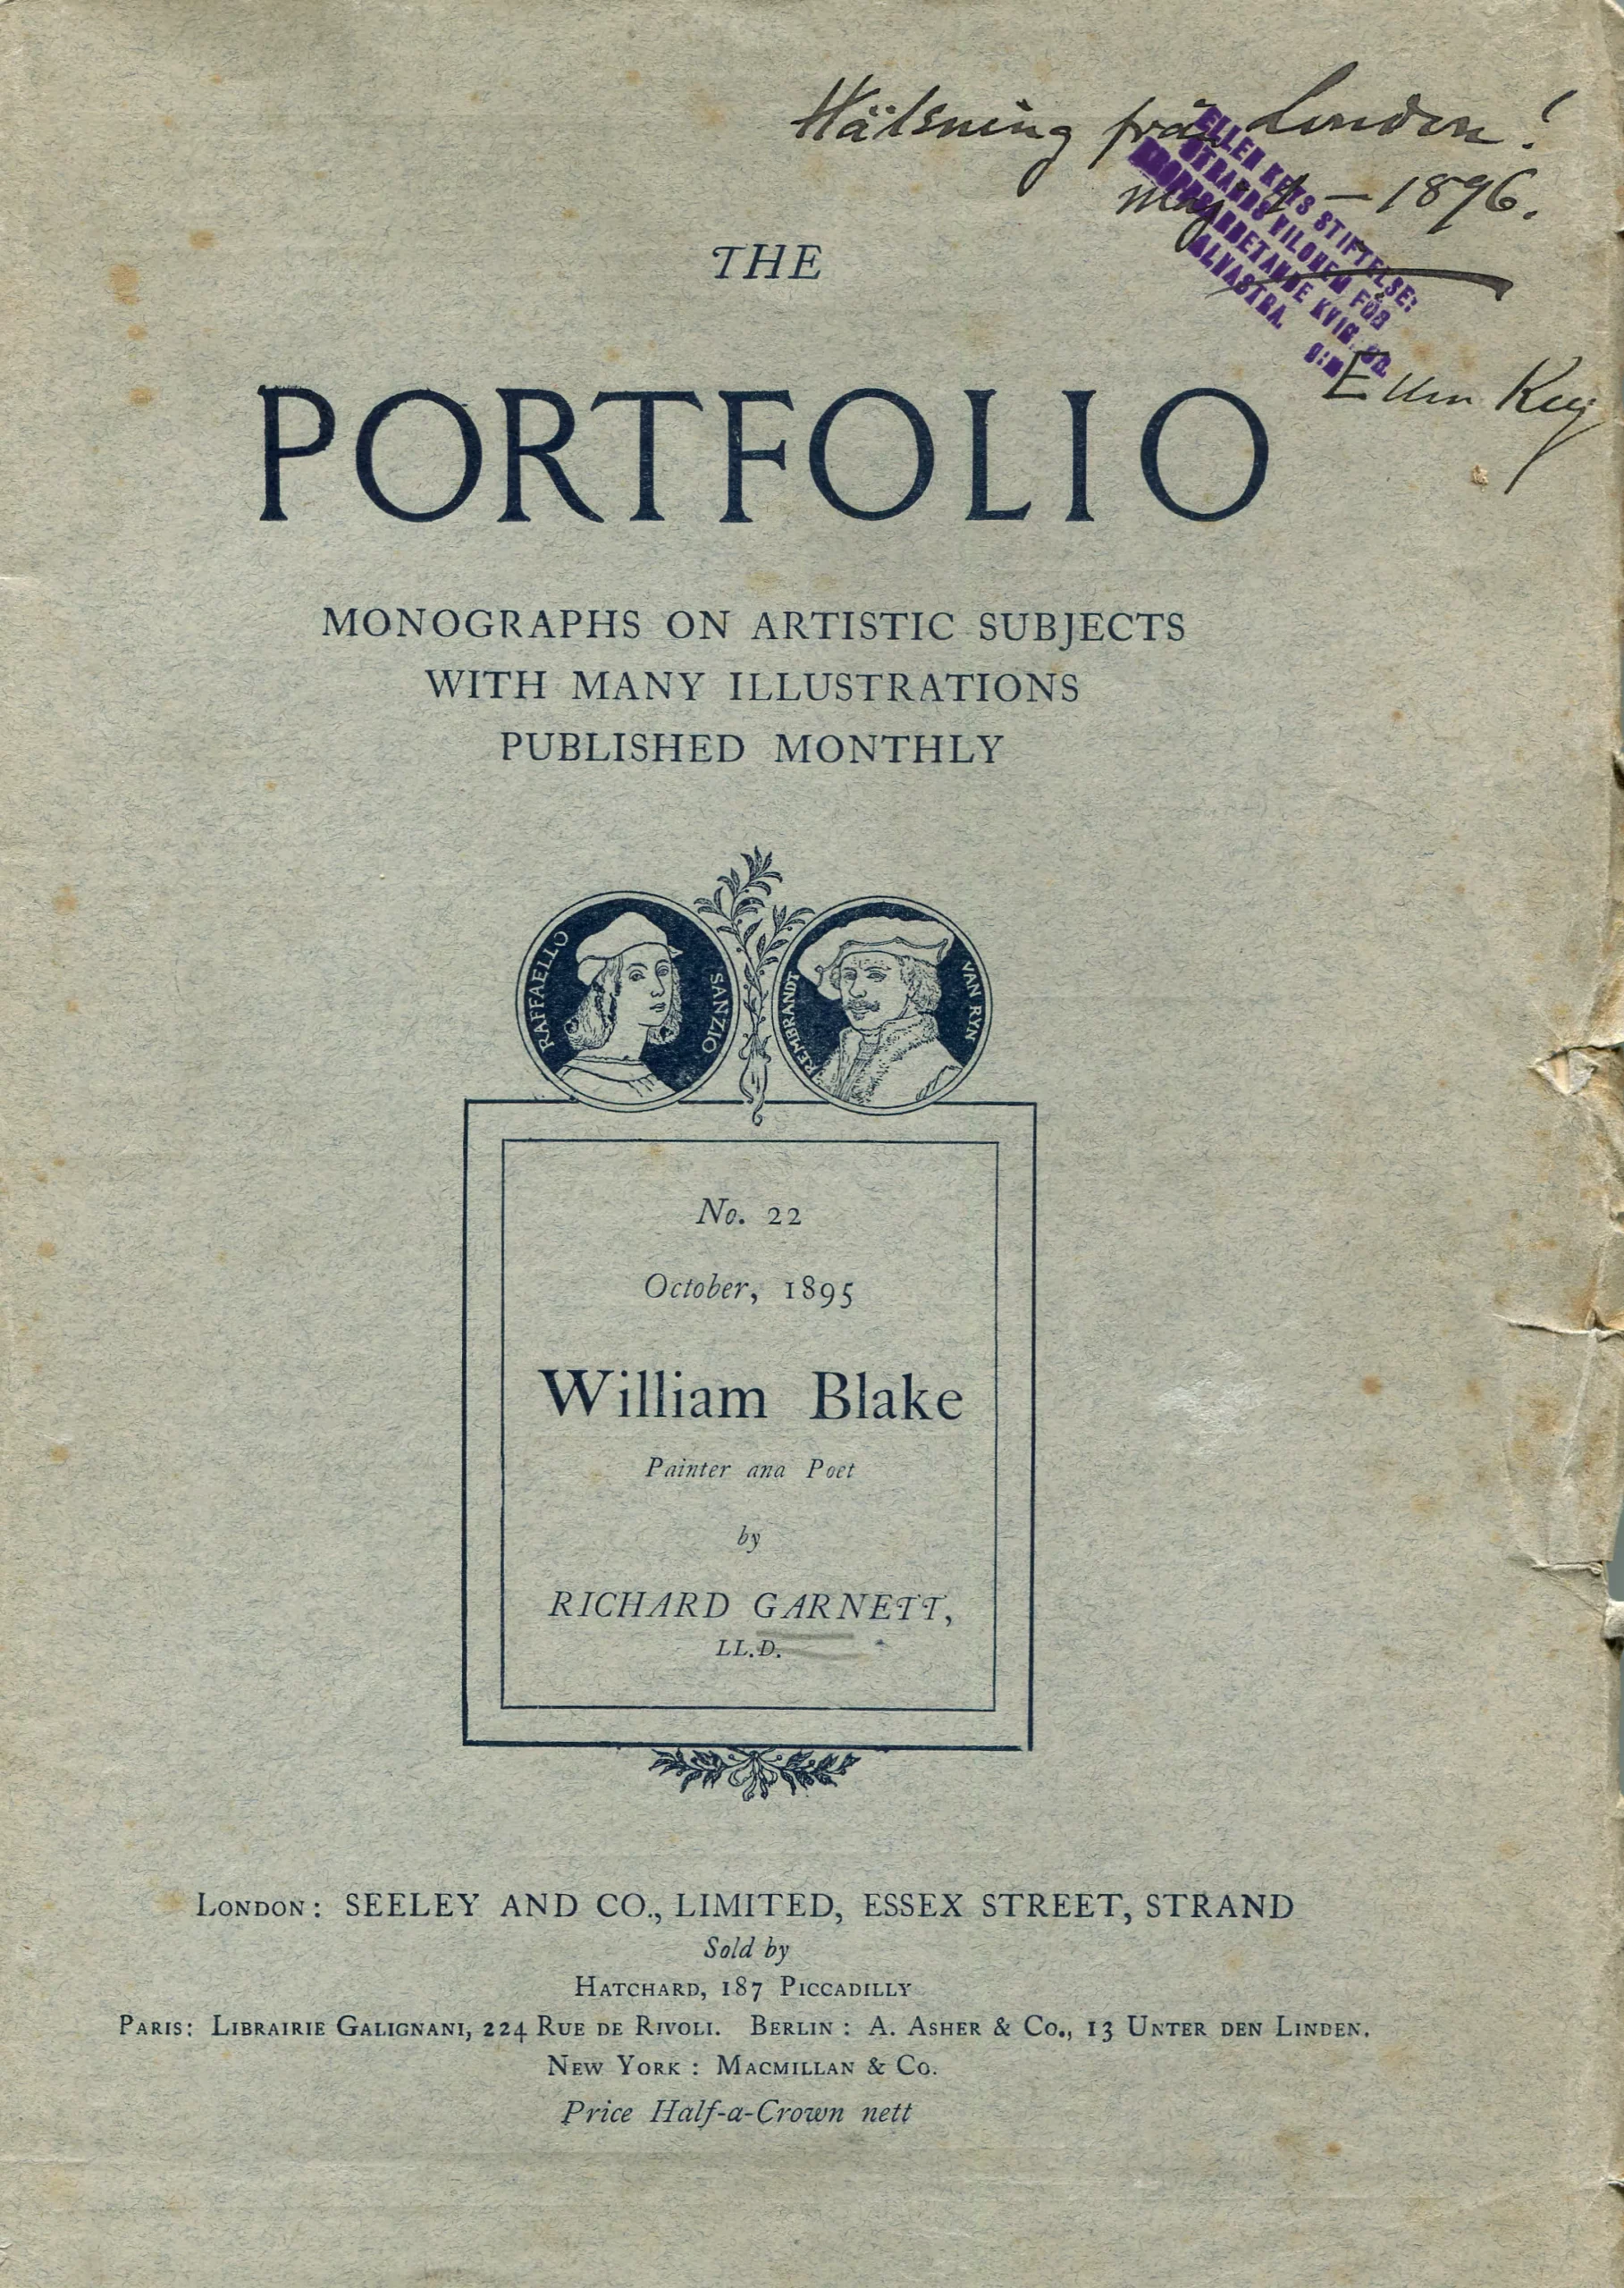 William Blake : painter and poet, London 1895